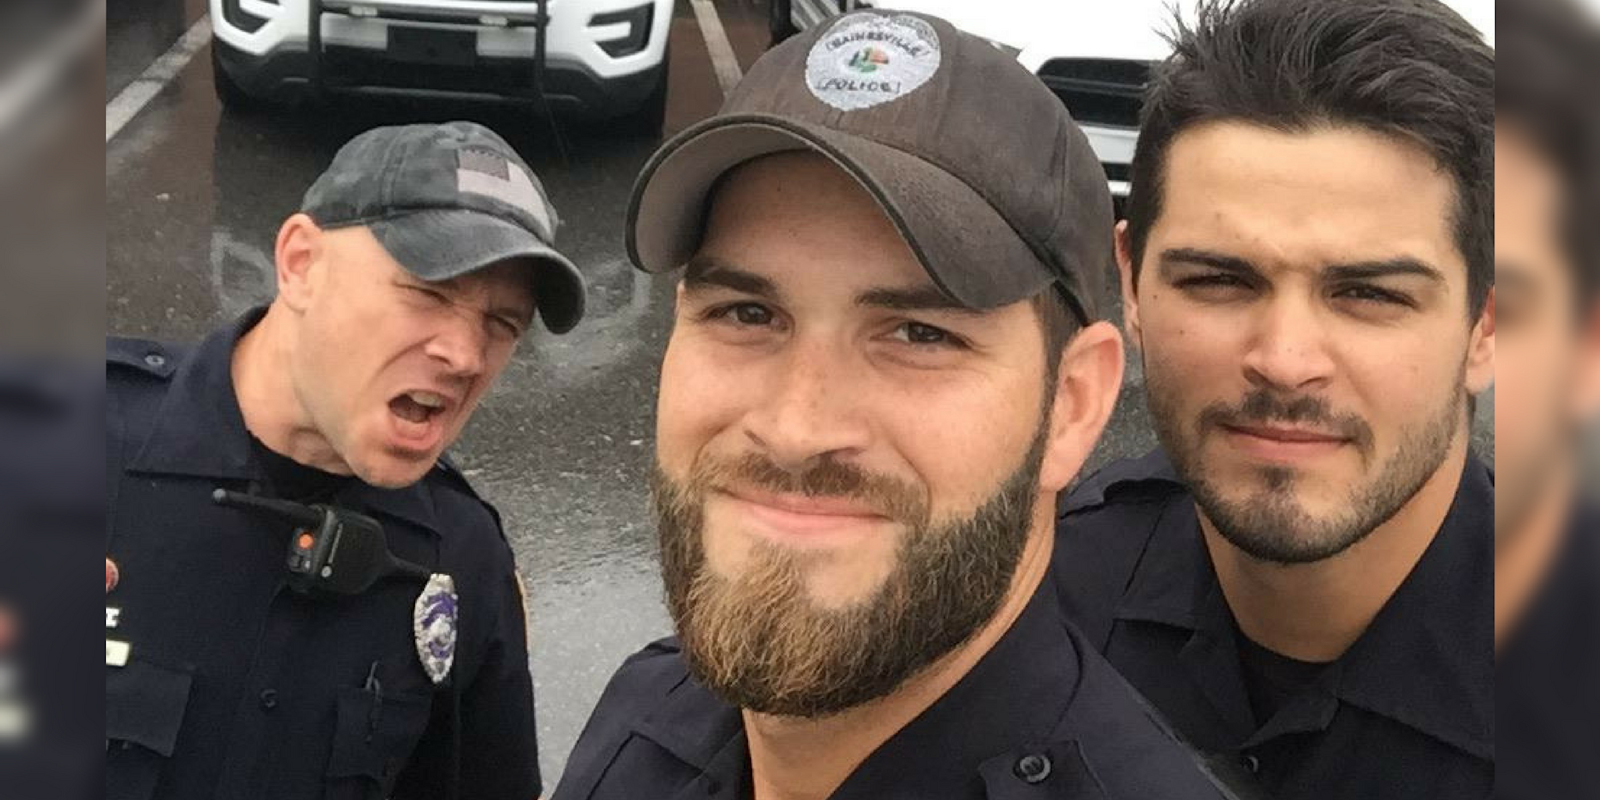 Gainsville, Florida 'hot cops' that went viral.